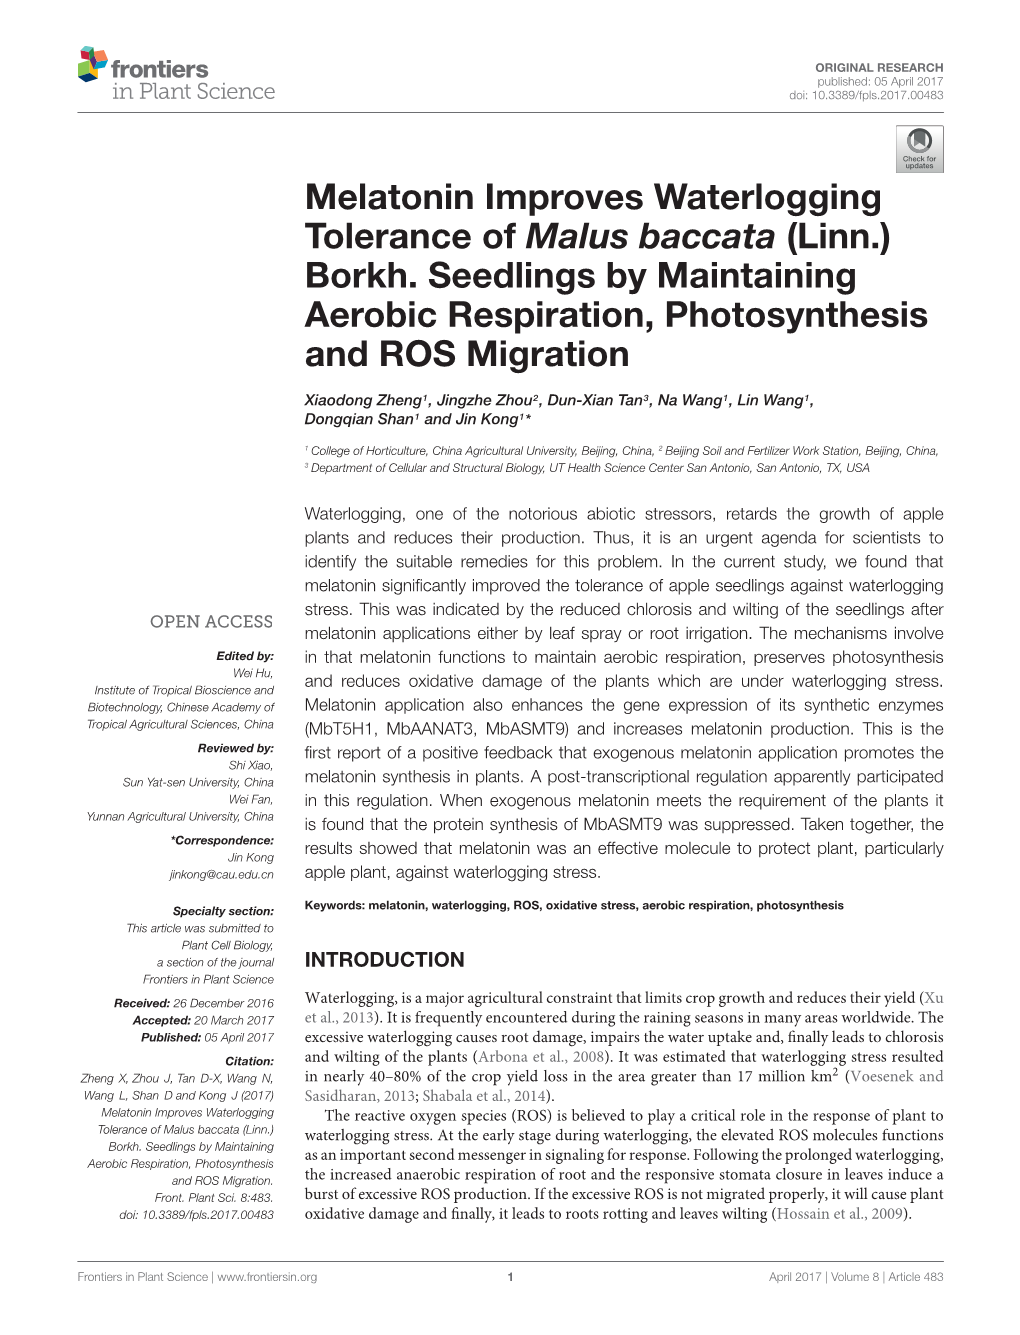 Melatonin Improves Waterlogging Tolerance of Malus Baccata (Linn.) Borkh